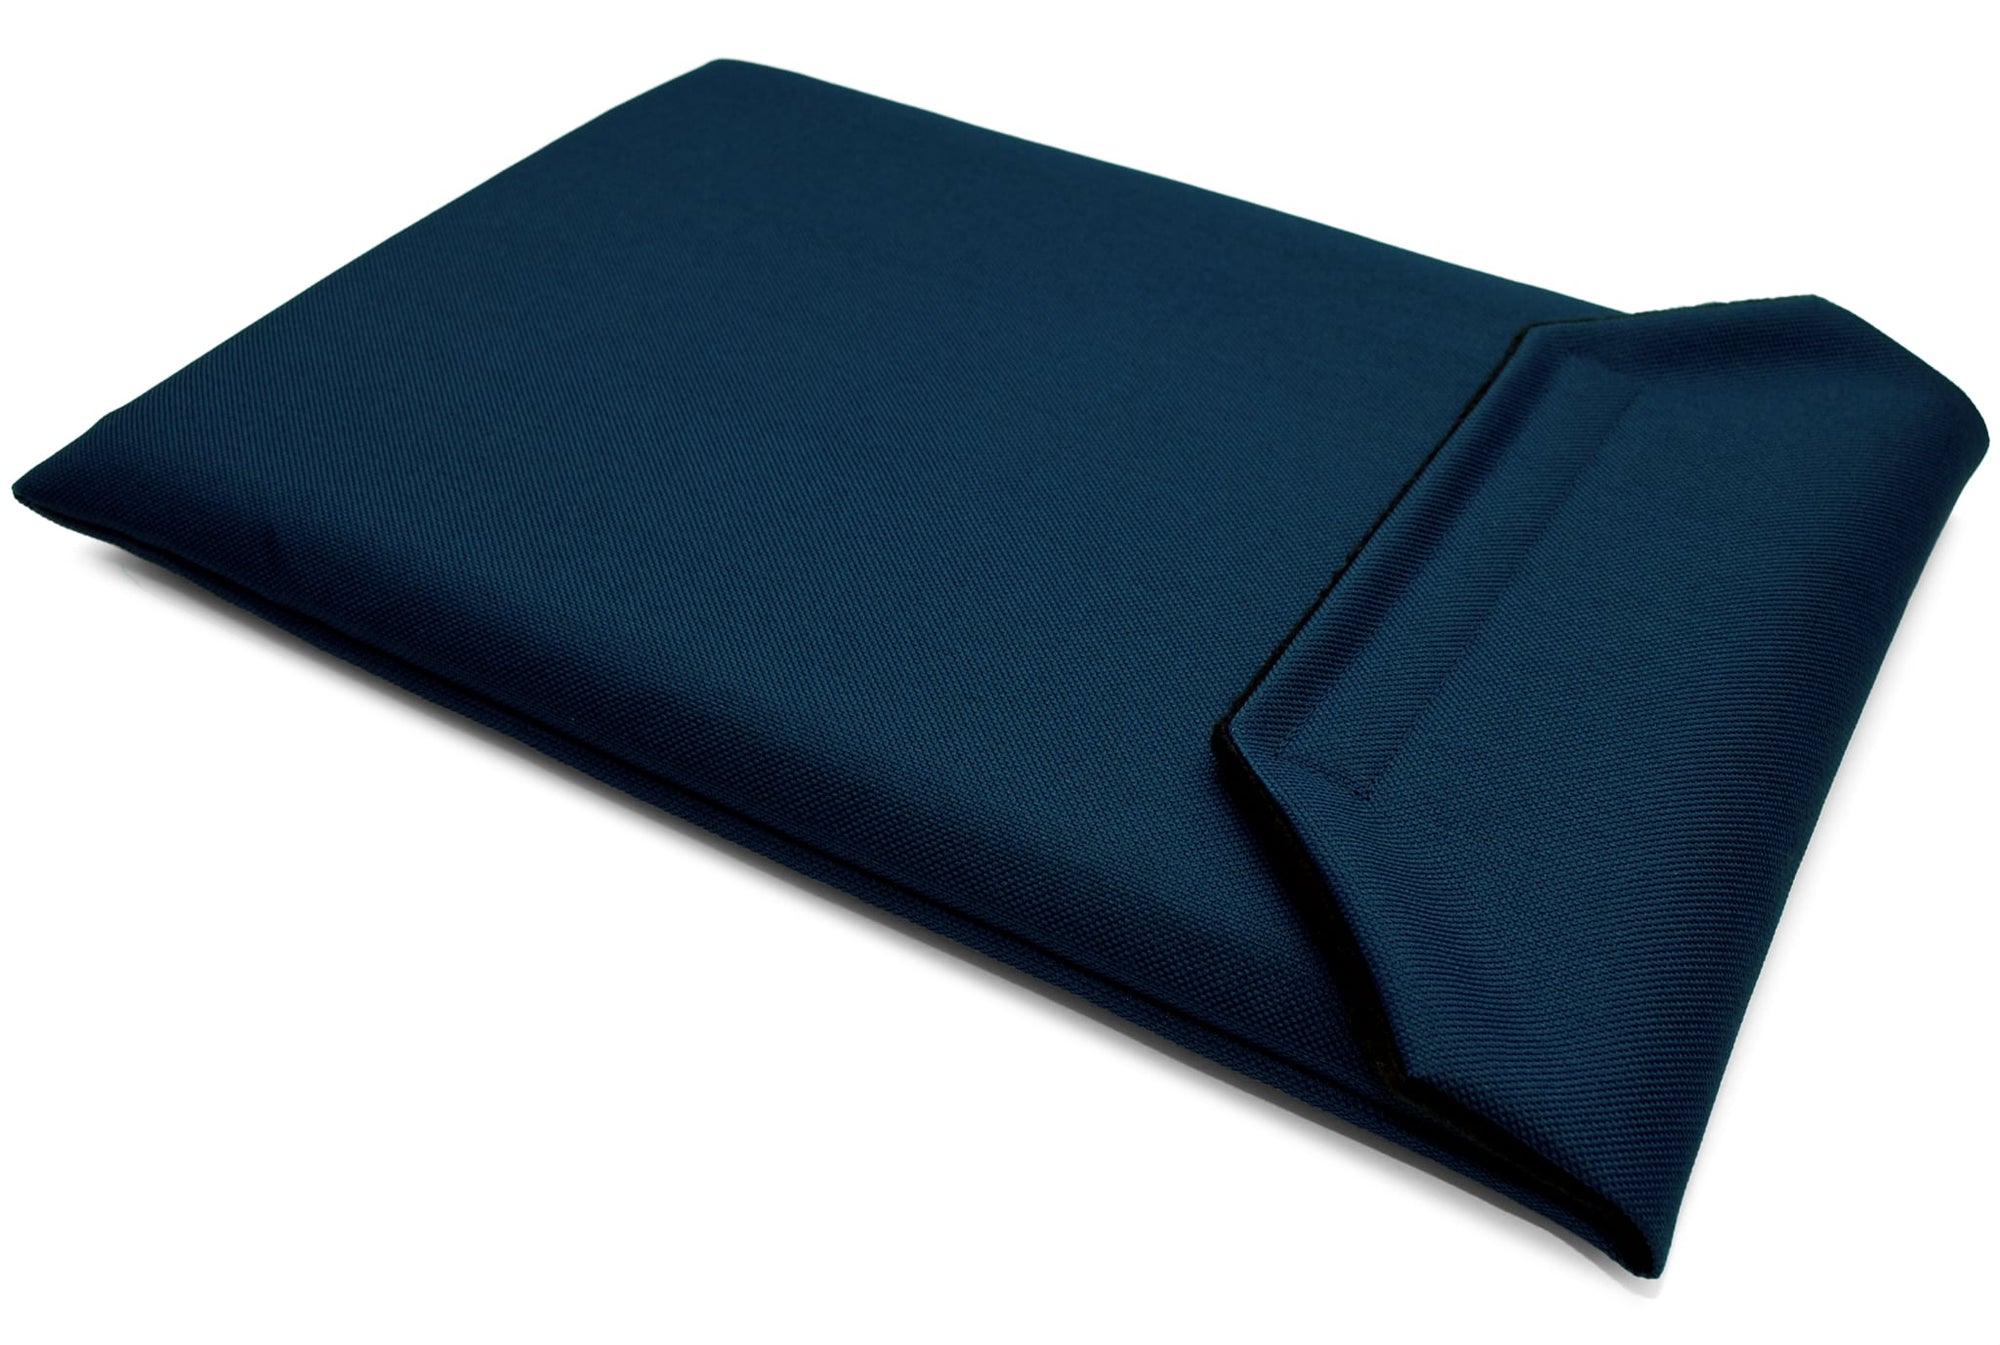 Ipad air 4th 5th sleeve case - everyday canvas - navy blue